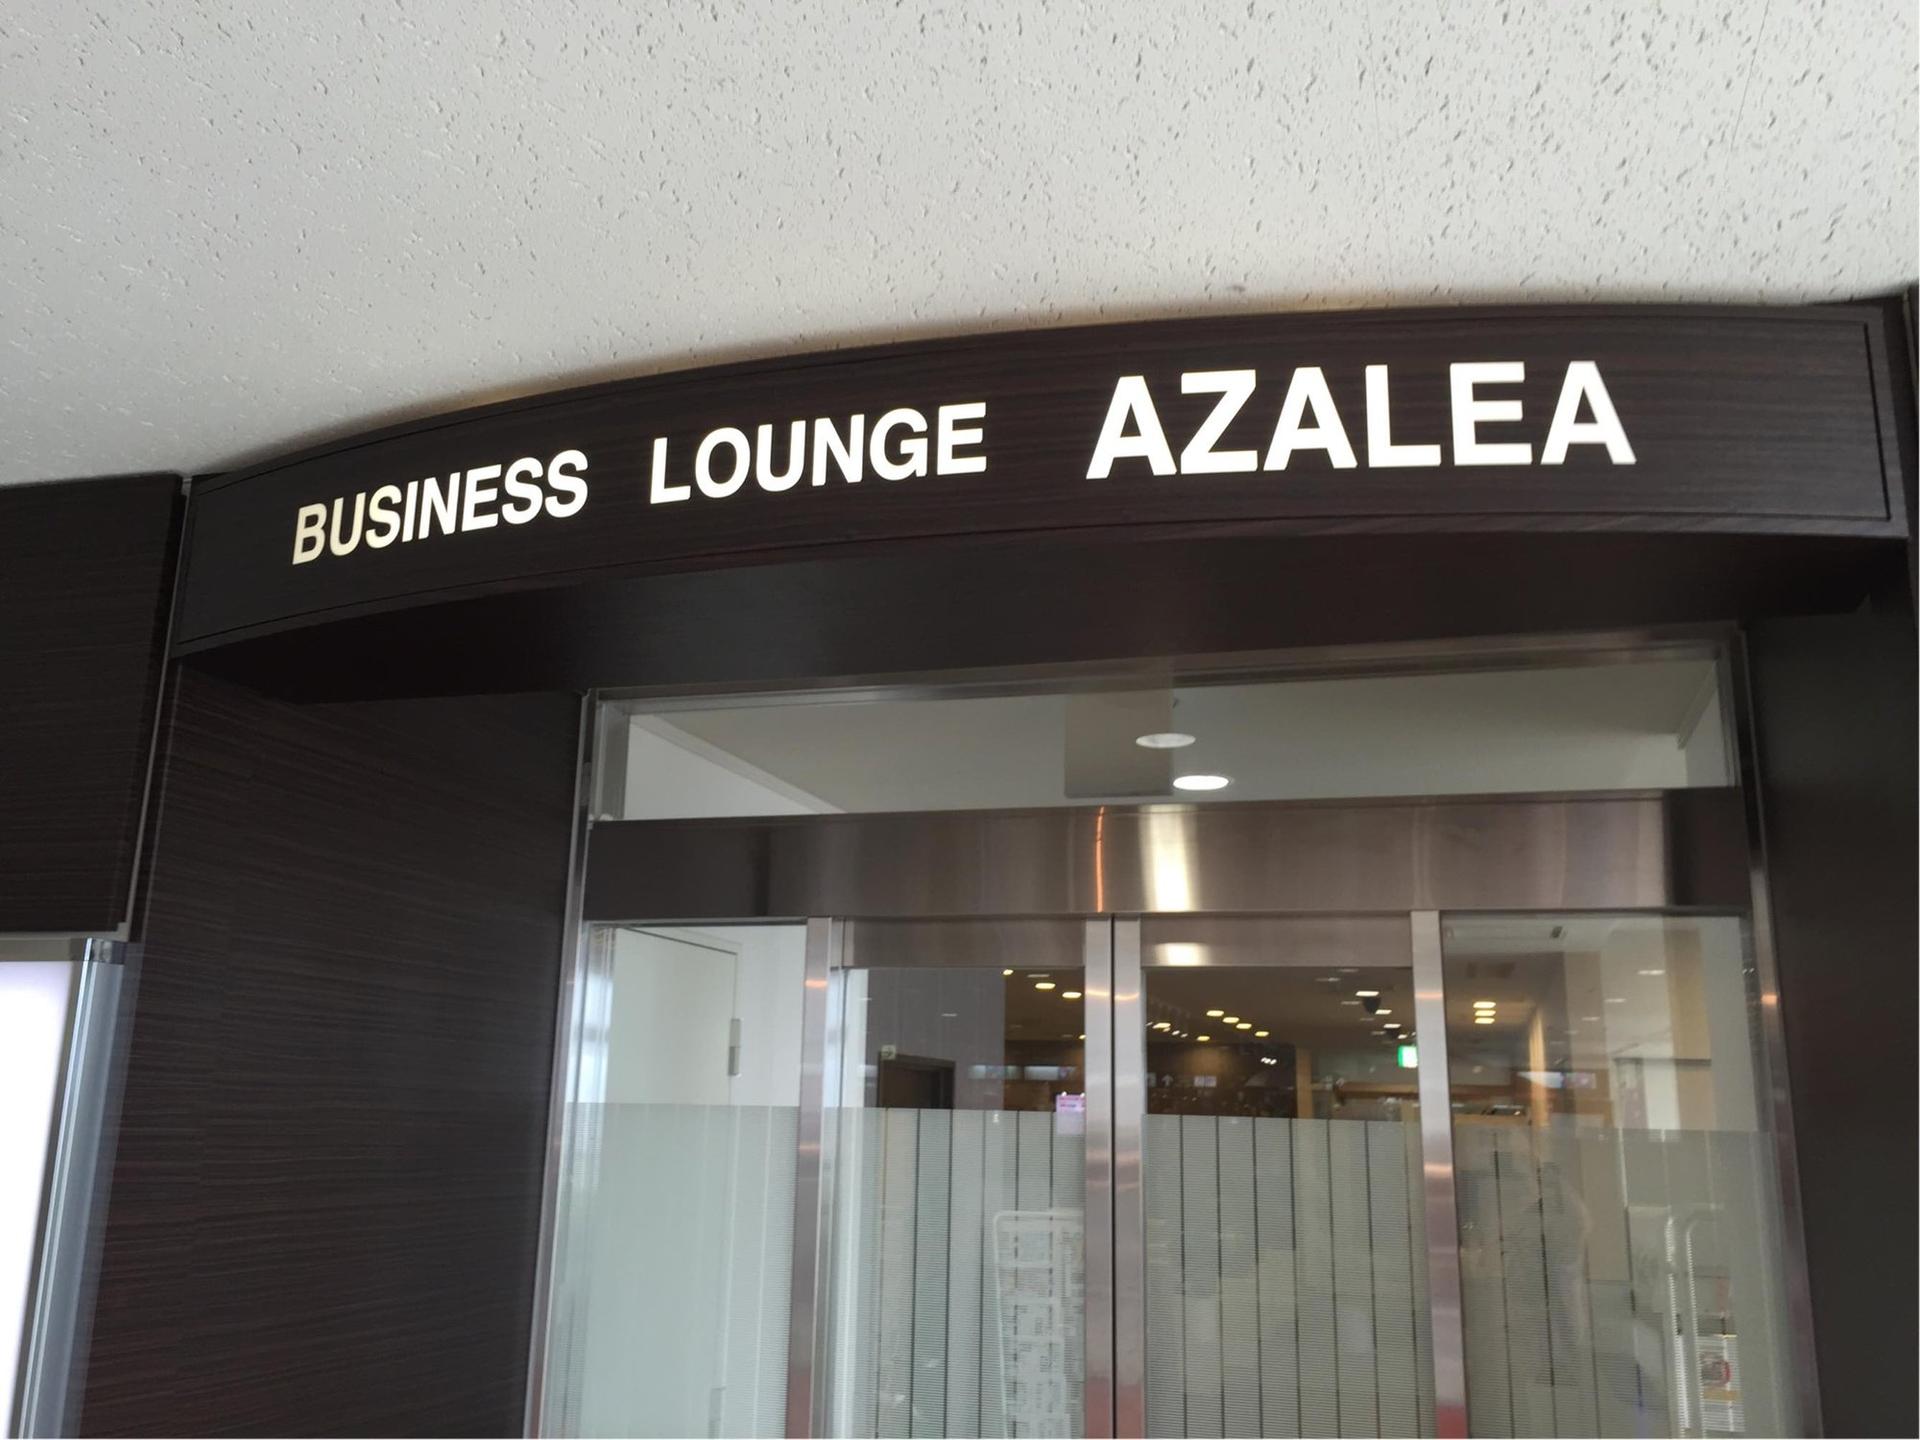 Business Lounge Azalea image 1 of 3